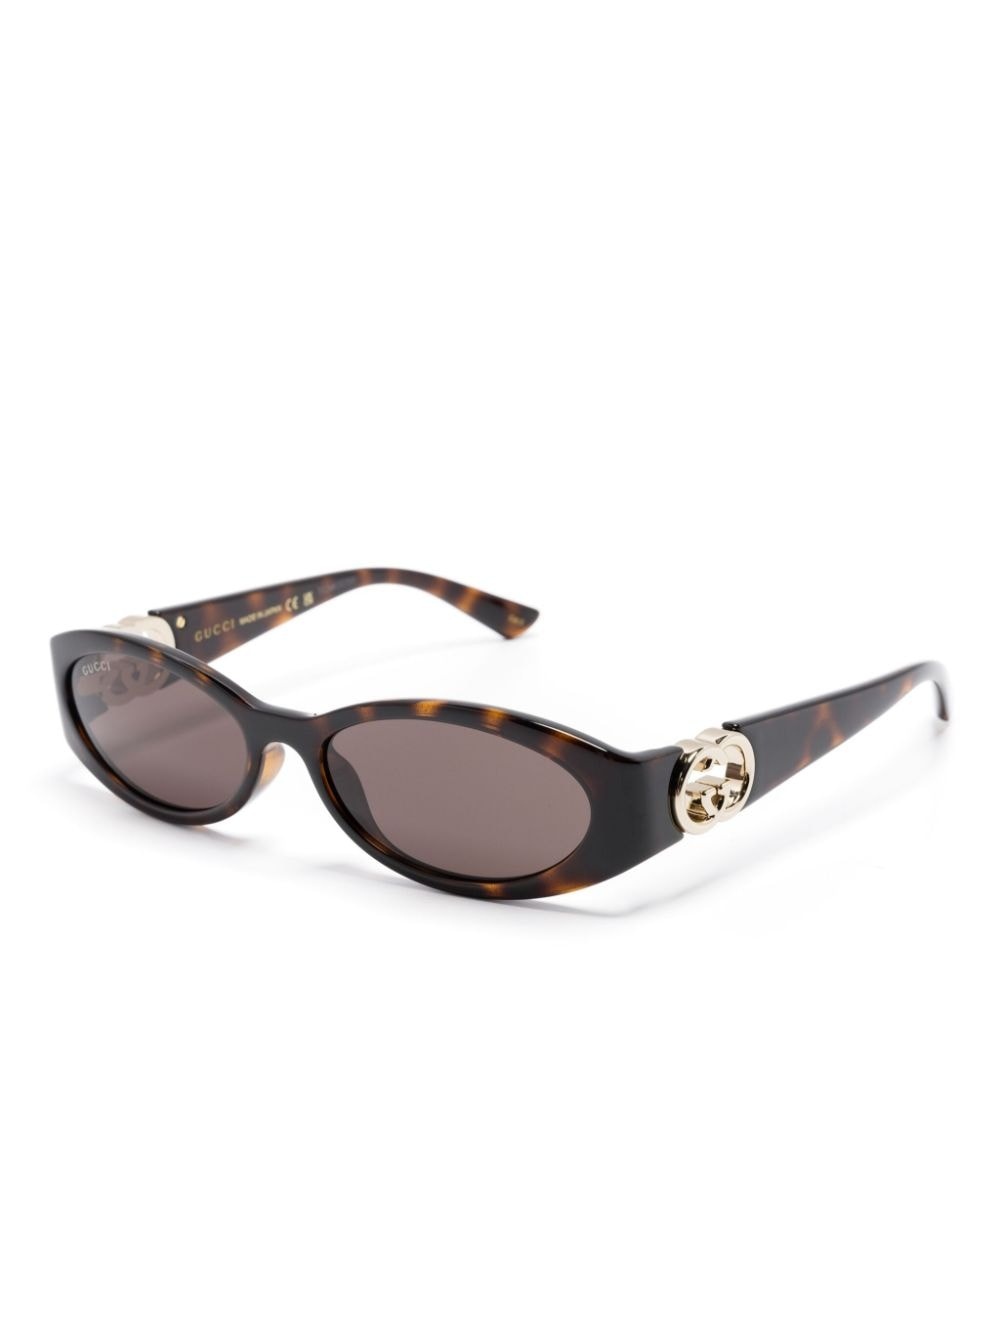 oval-frame sunglasses - 2